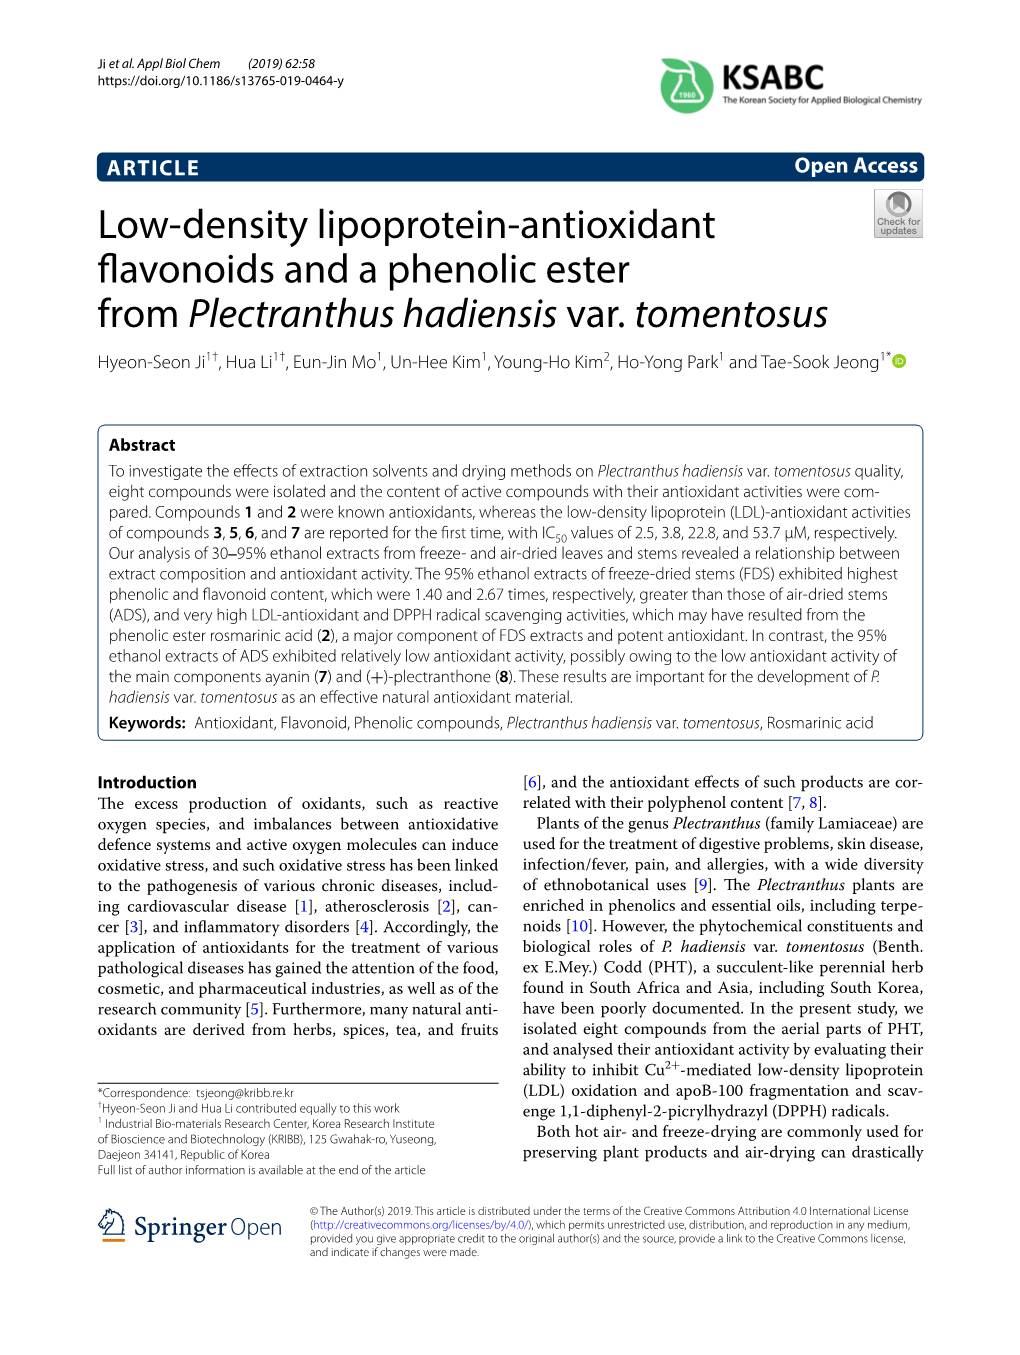 Low-Density Lipoprotein-Antioxidant Flavonoids and a Phenolic Ester